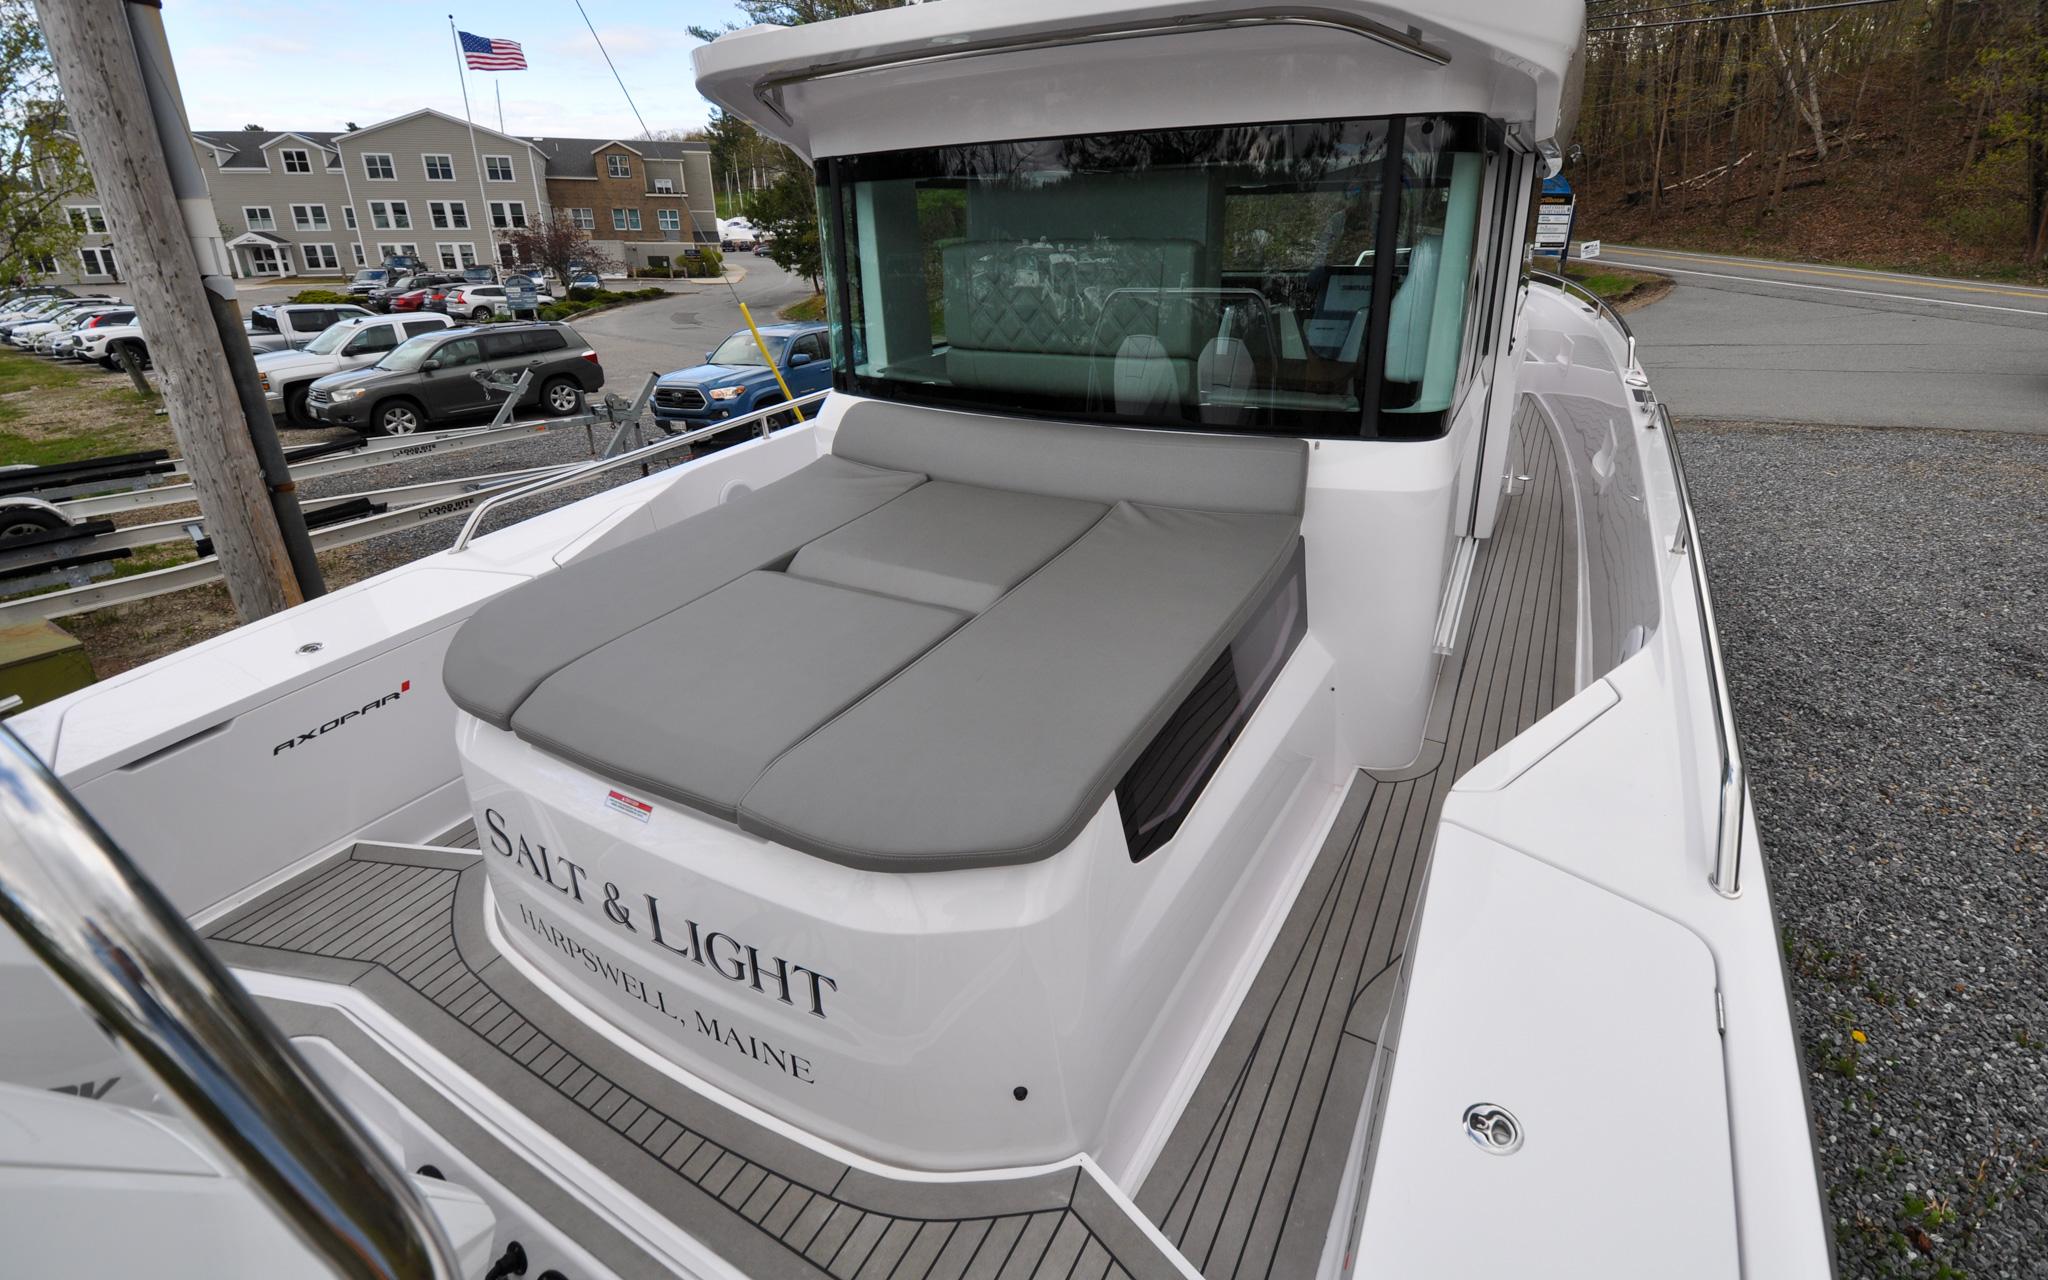 Axopar 37XC - Salt and Light - Deck - Aft Cabin with Sun Pad